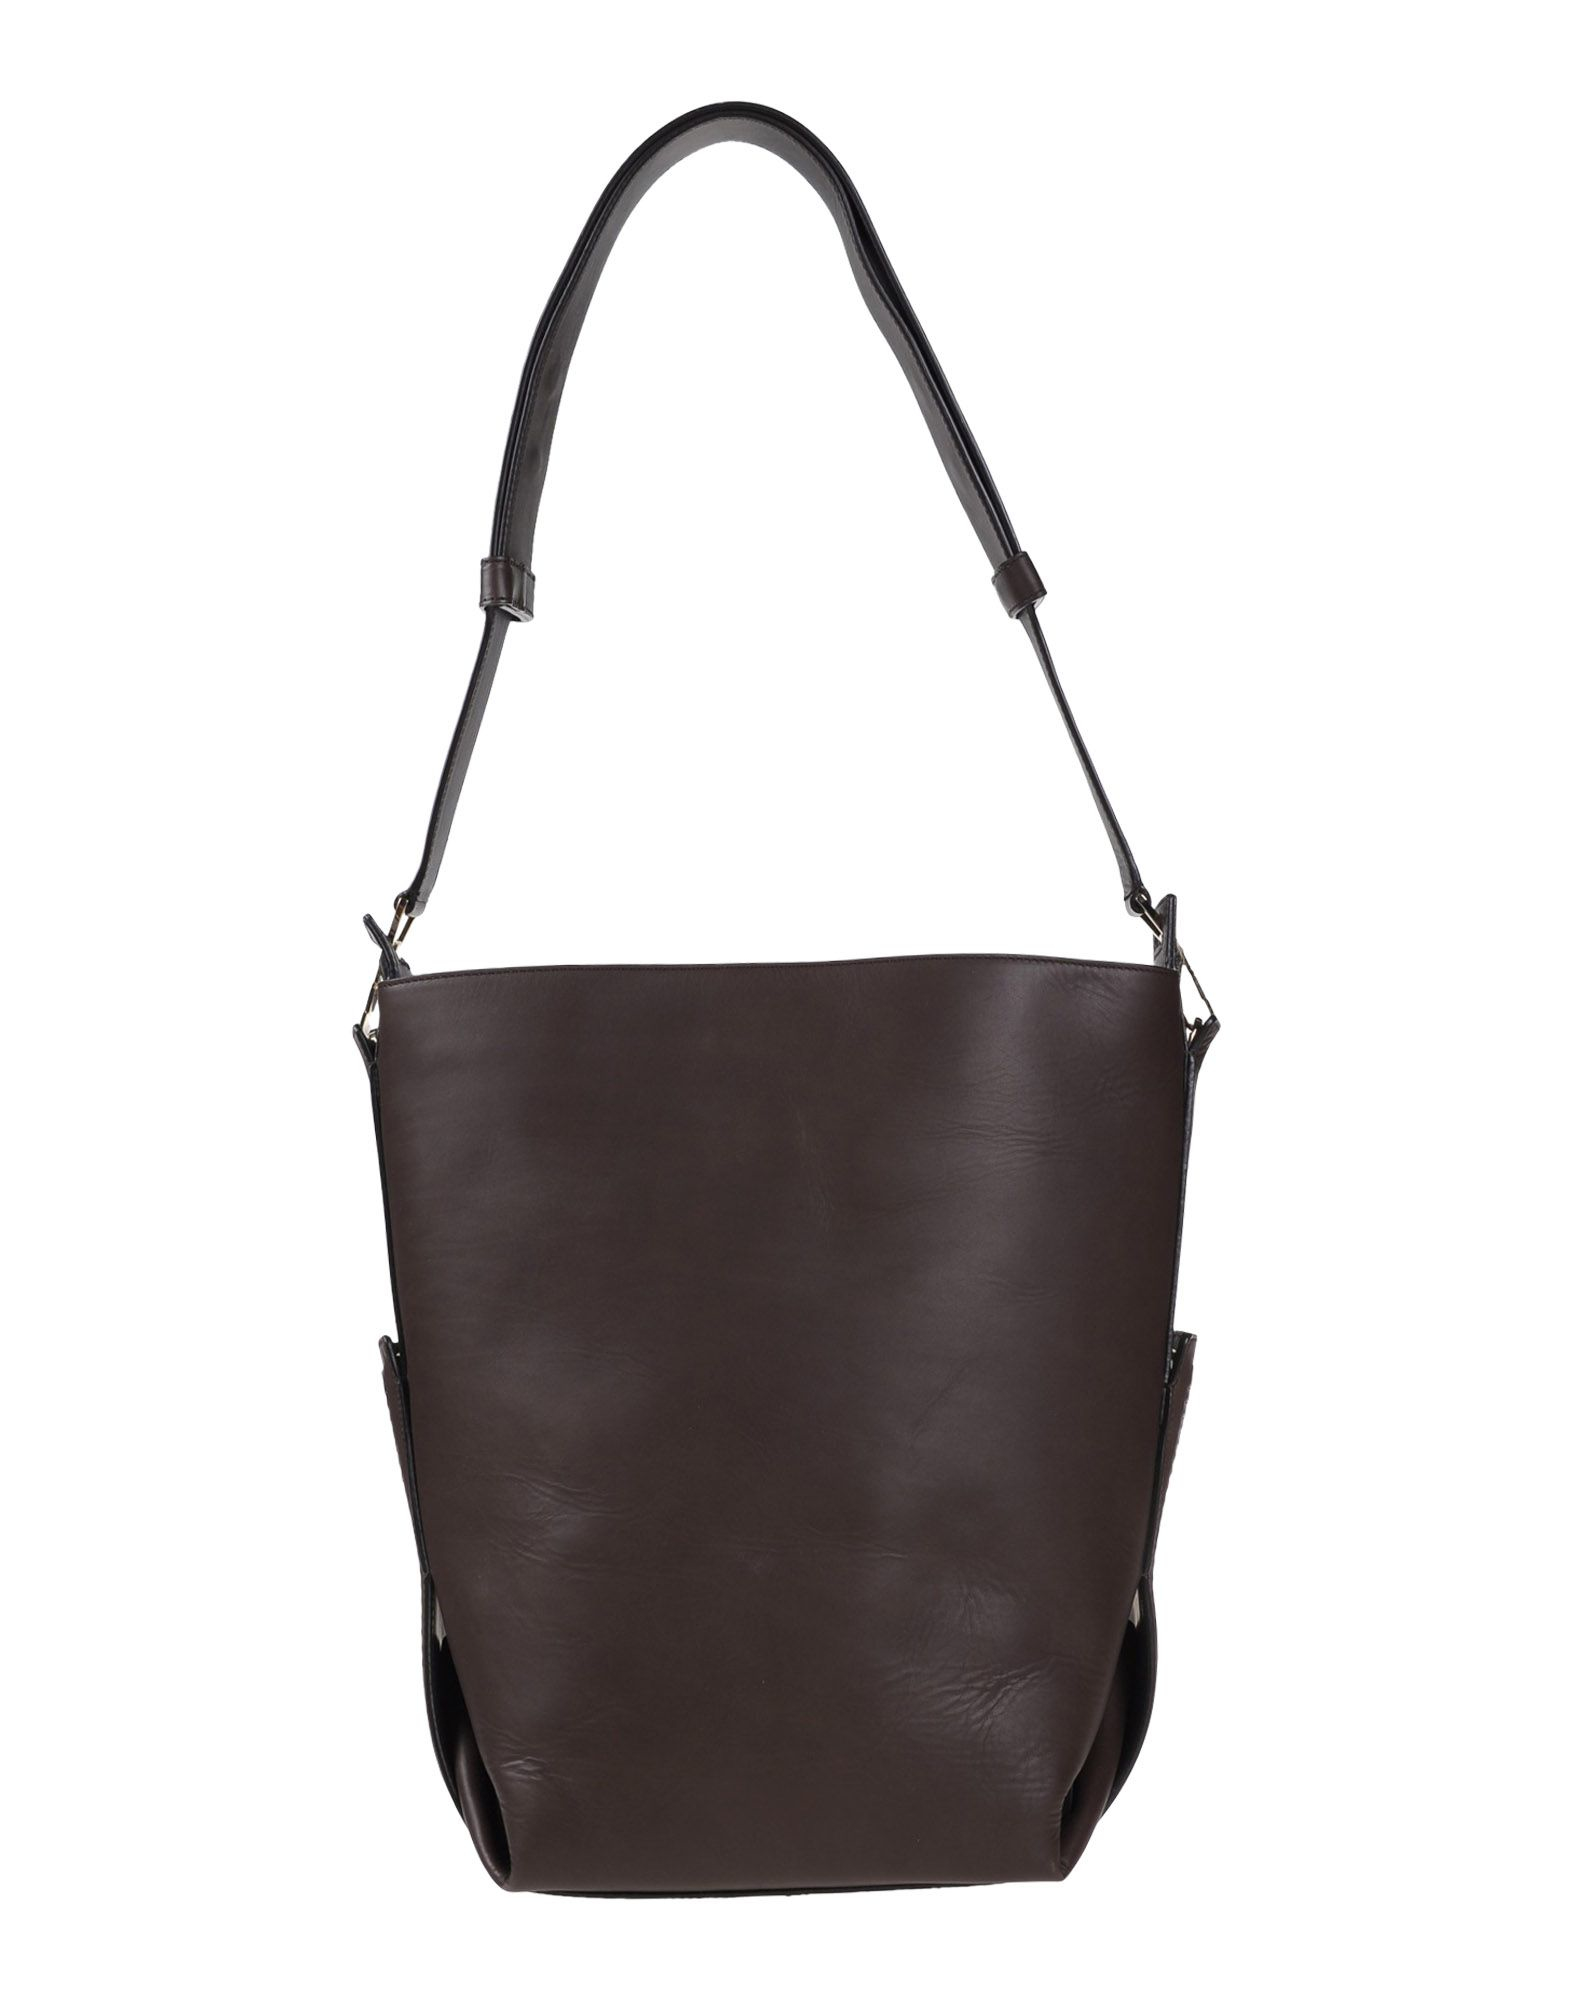 Lyst - Emilio Pucci Shoulder Bag in Brown